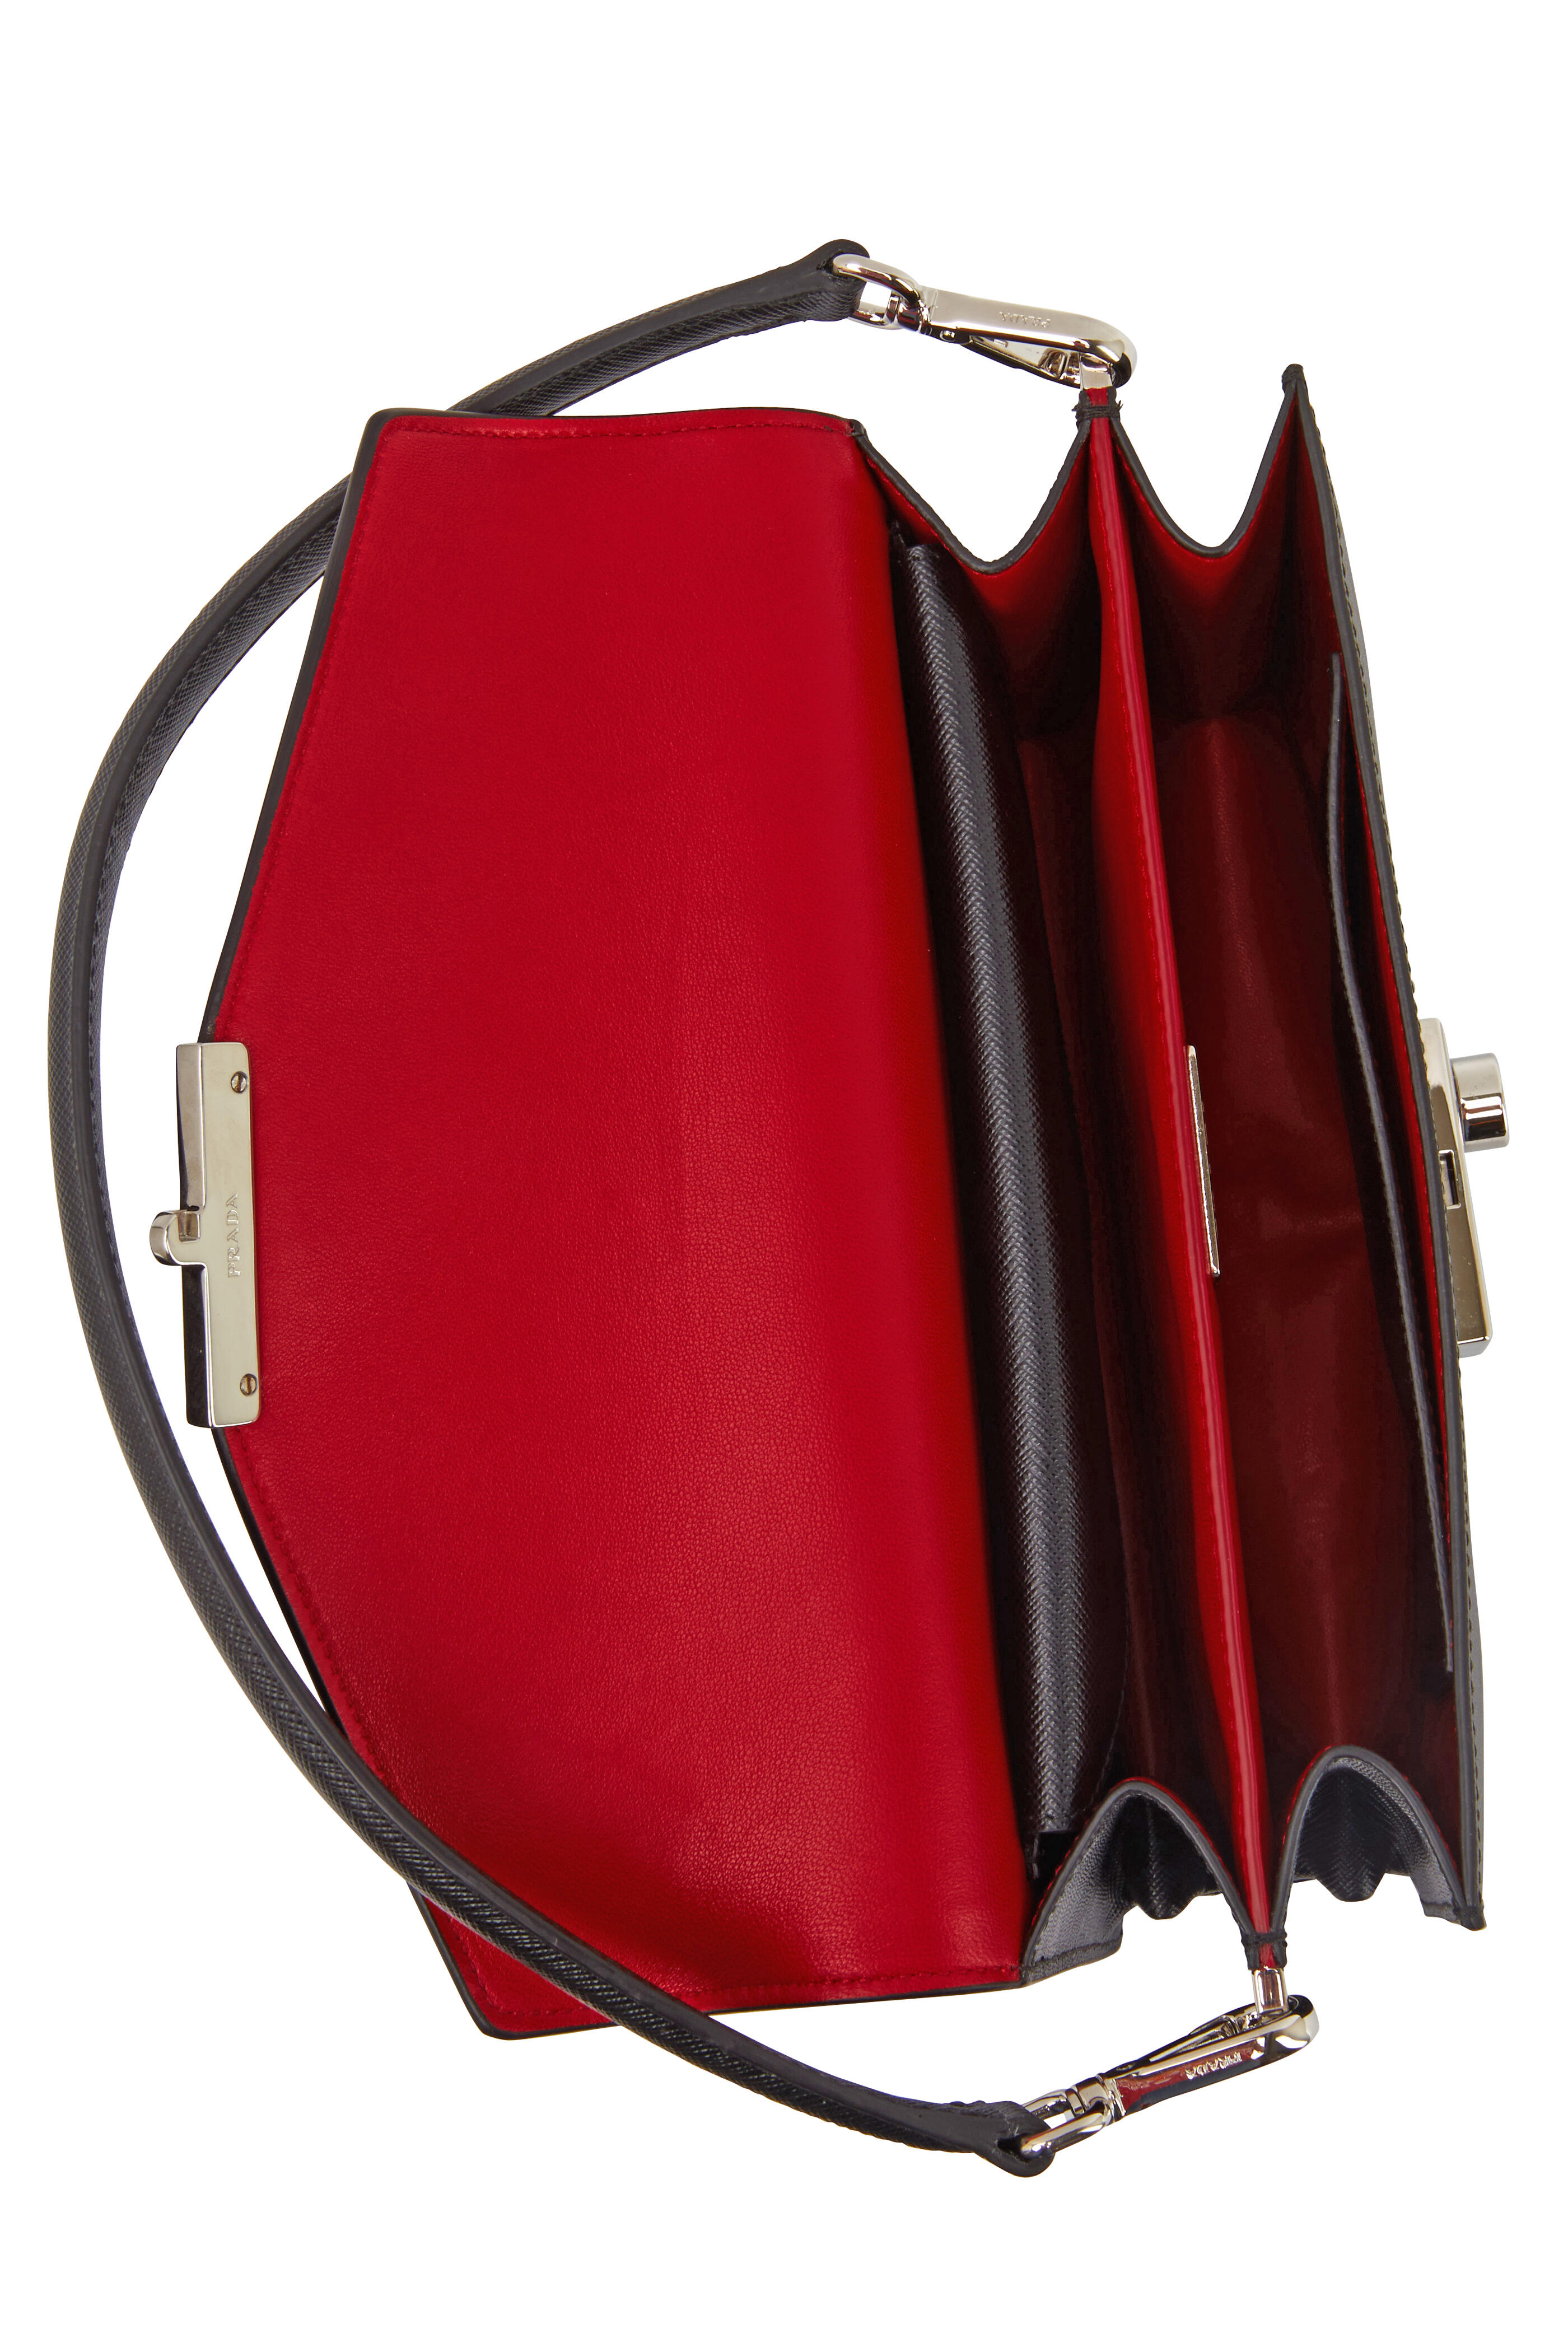 Prada Heart Saffiano Mini Shoulder Bag in Red